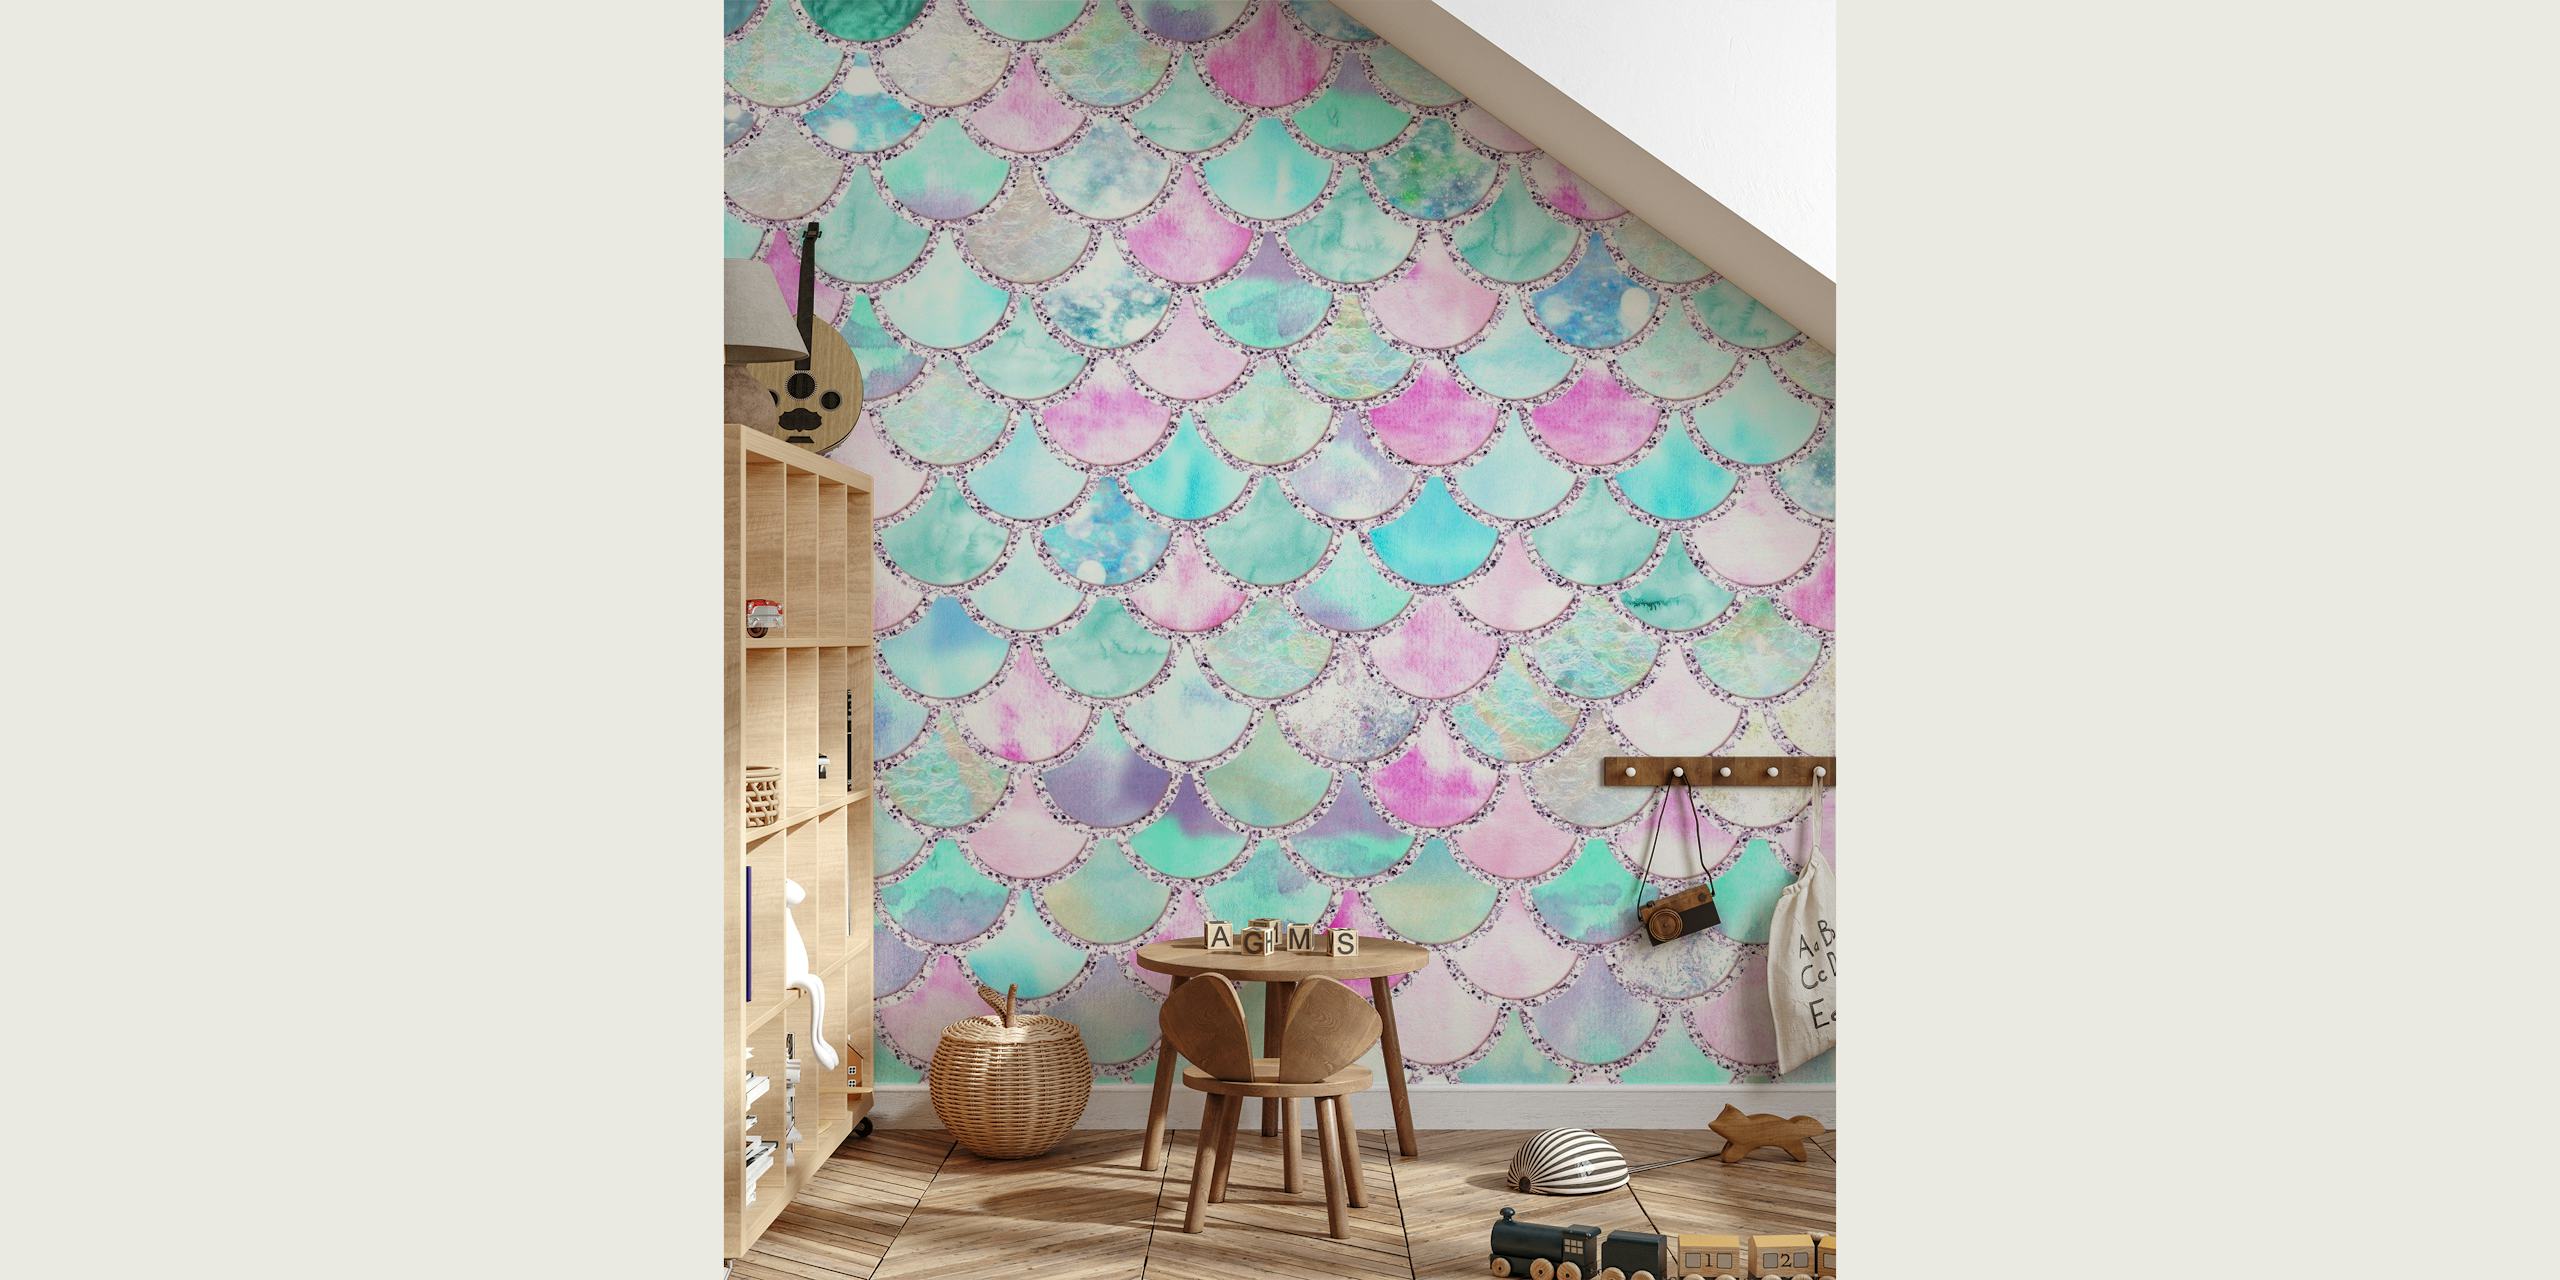 Teal Summer Mermaid Scales Peel and Stick Wallpaper Design